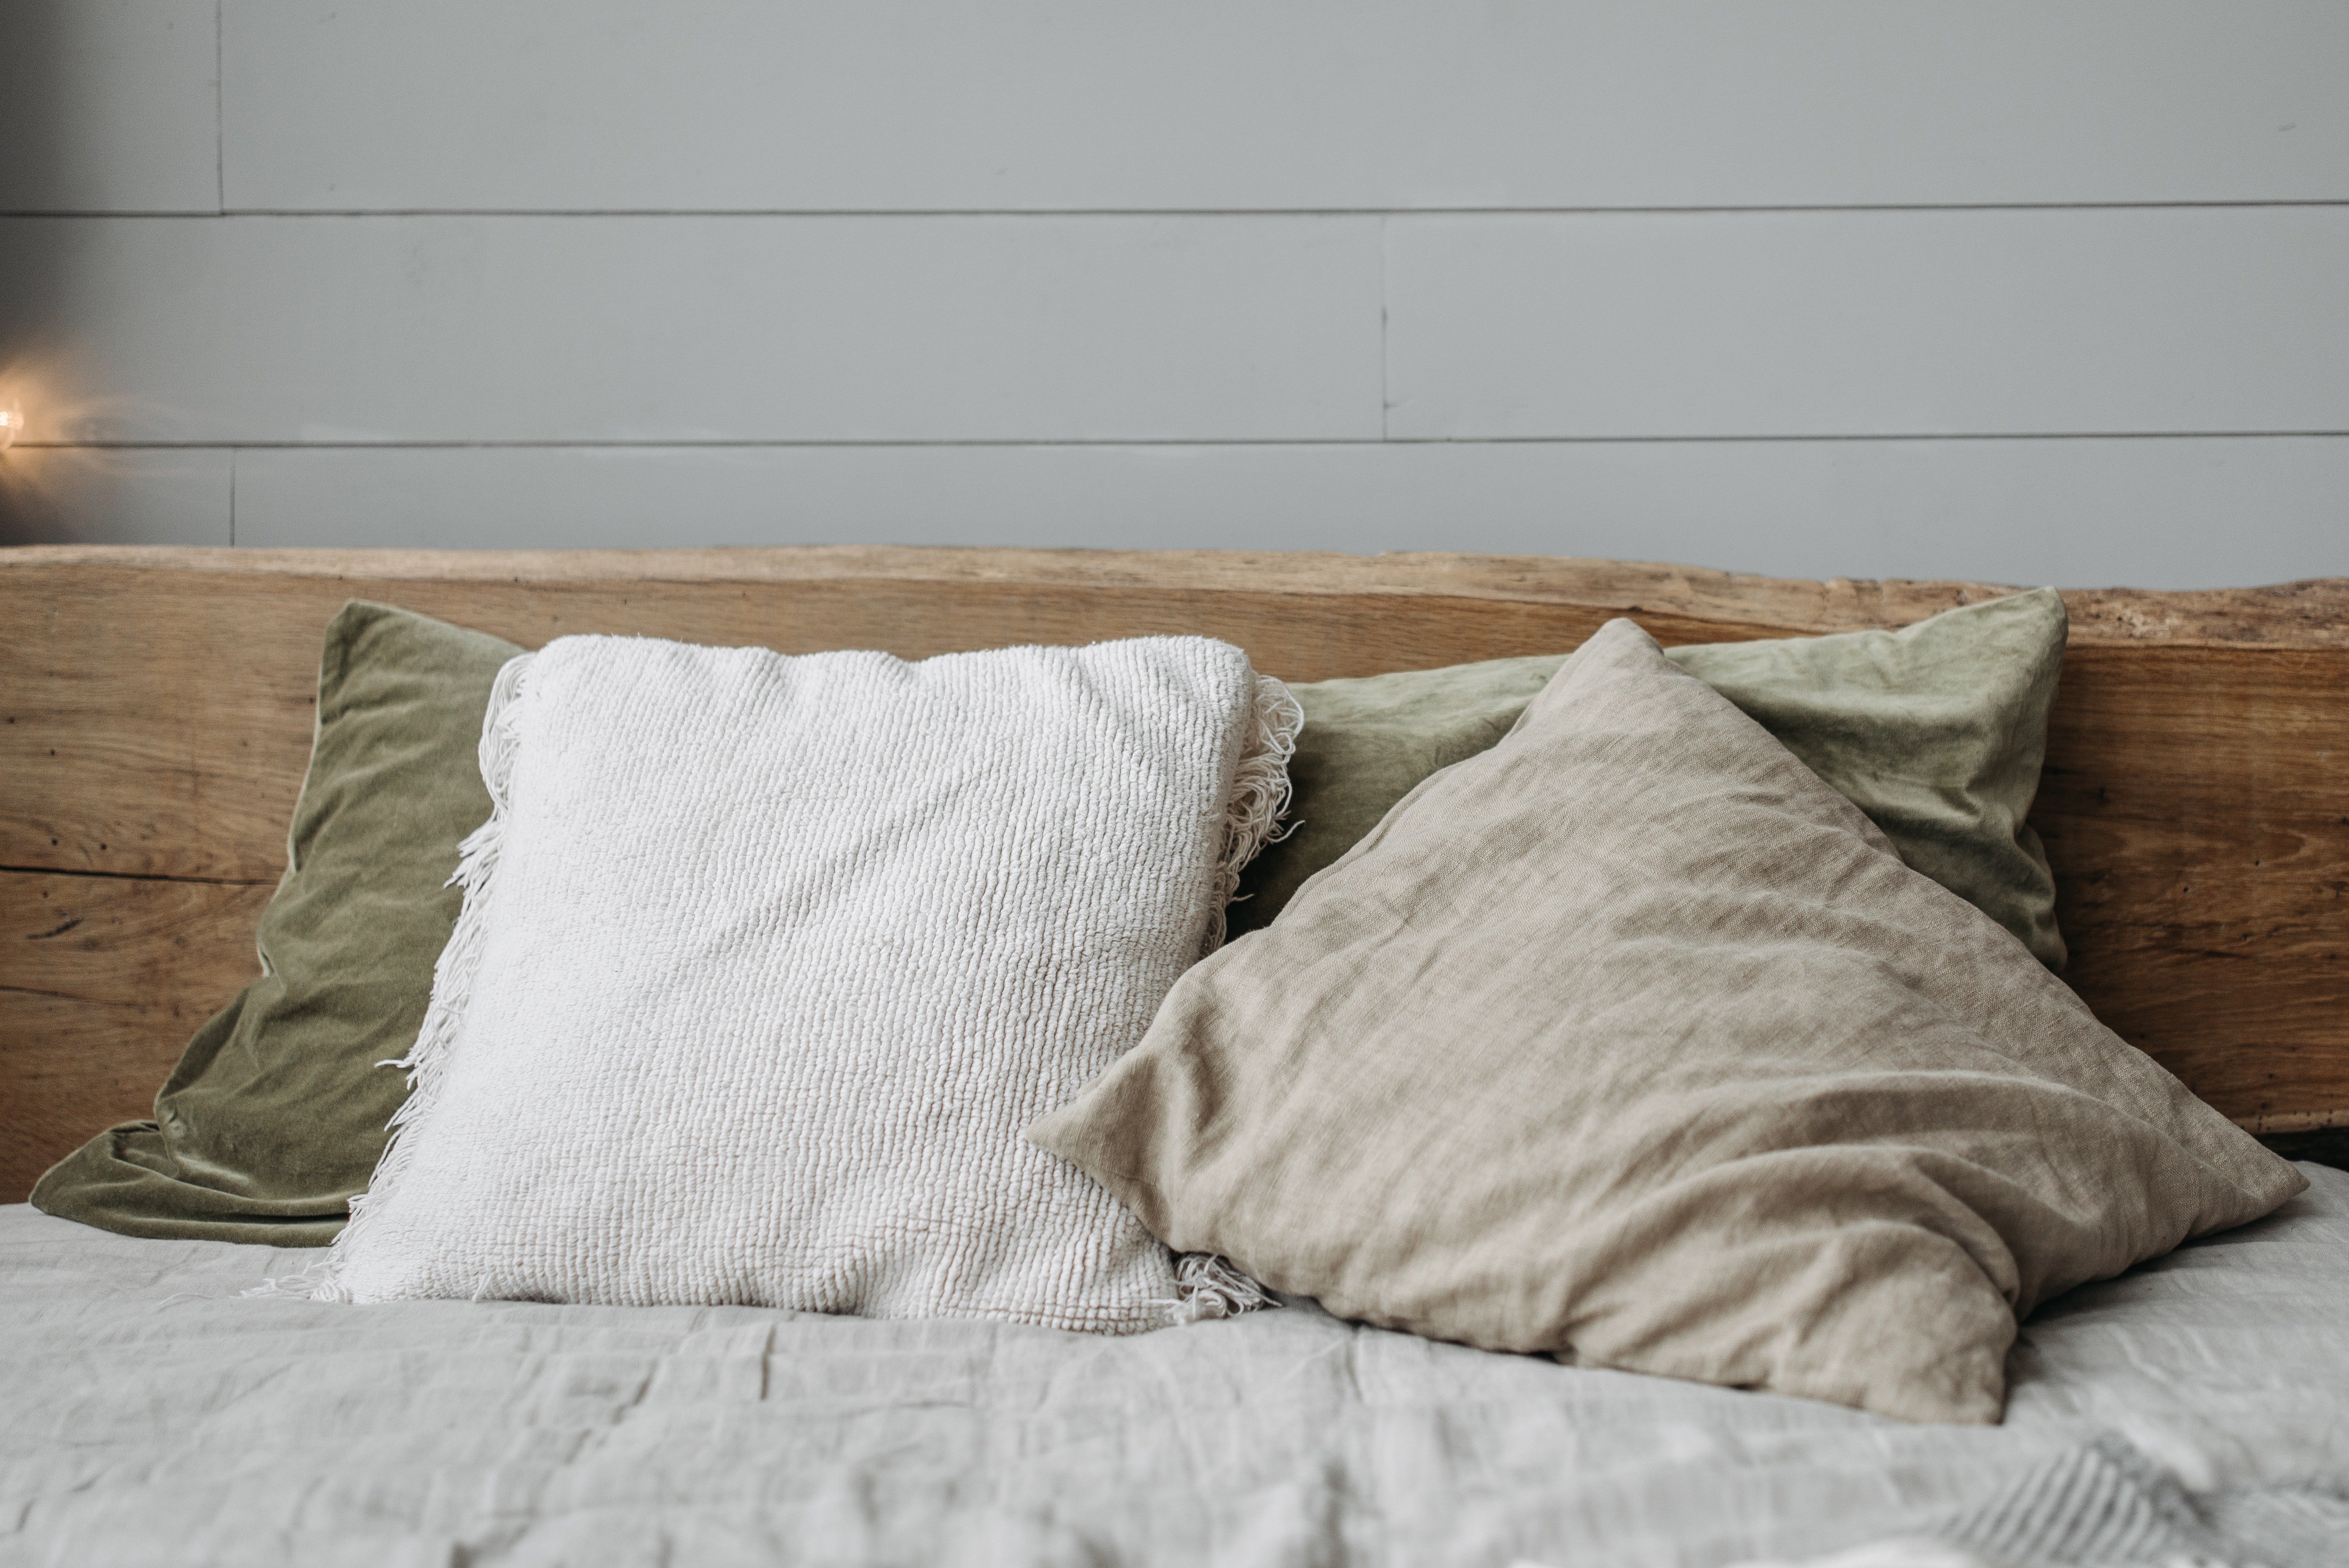 Almohadas sobre cama. | Foto: Pexels